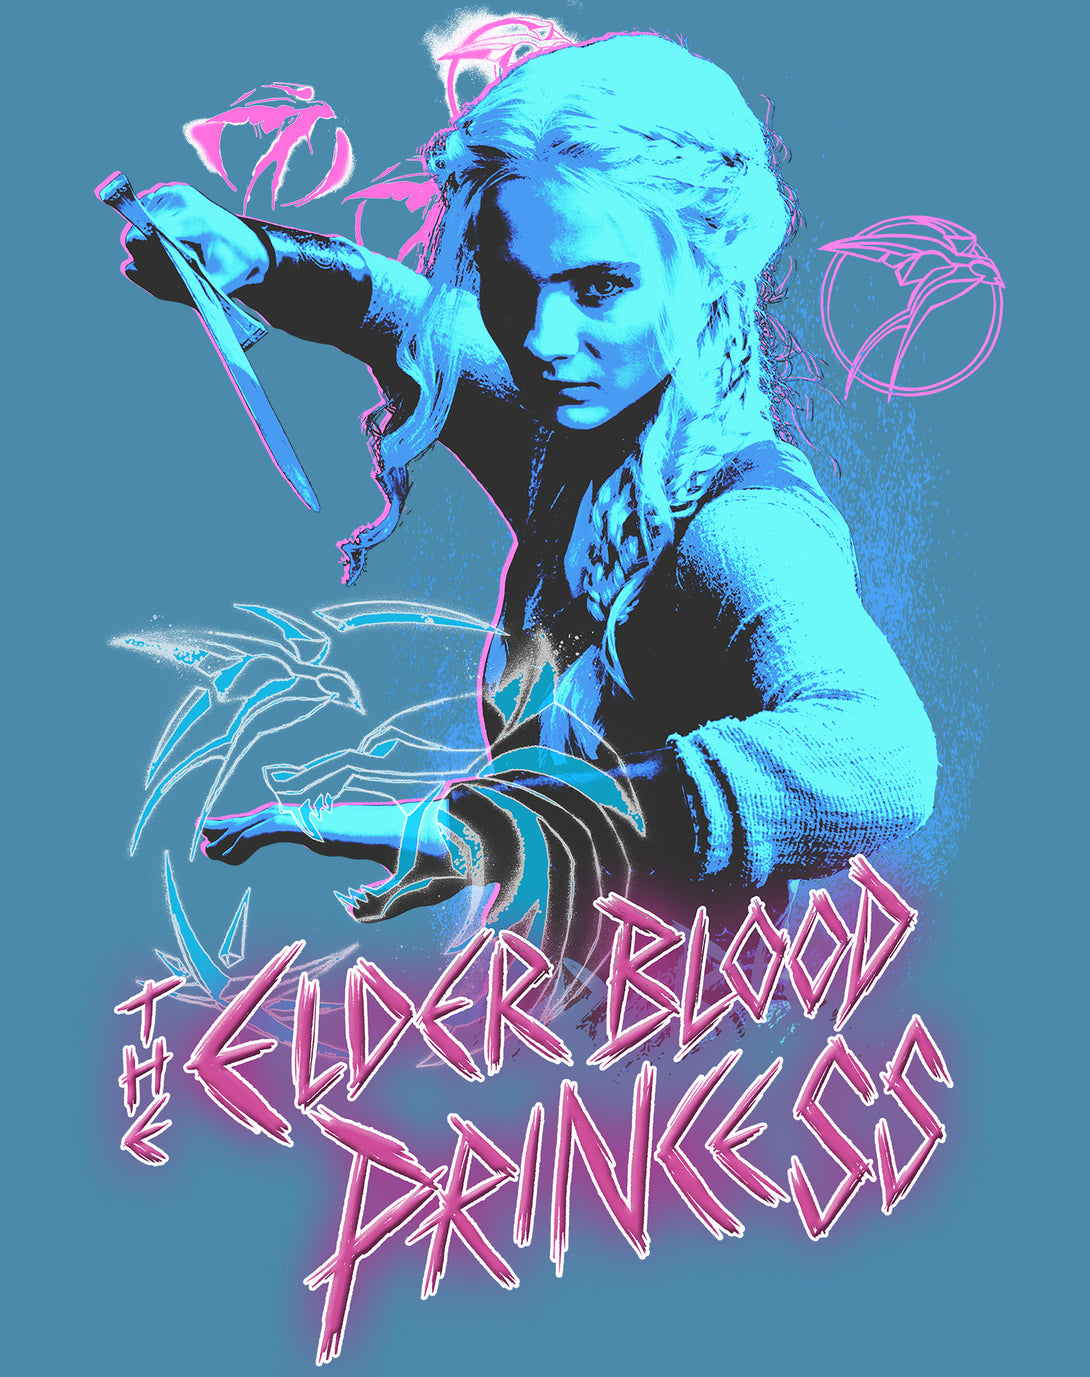 The Witcher Ciri Elder Blood Princess Official Women's T-Shirt Turquoise - Urban Species Design Close Up